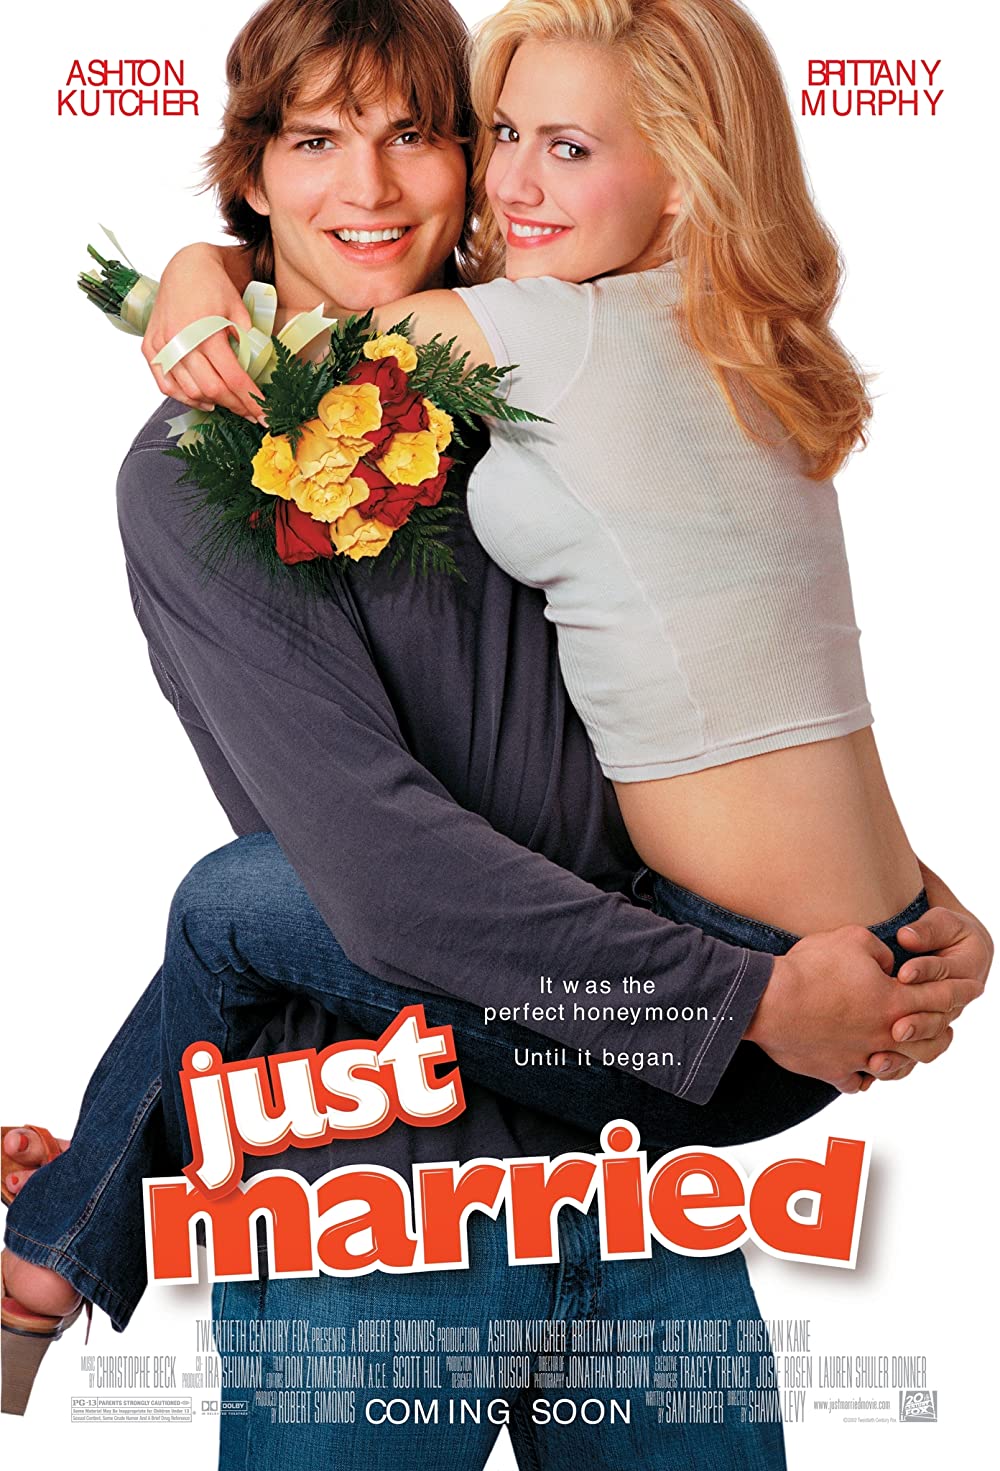 Filmbeschreibung zu Just Married